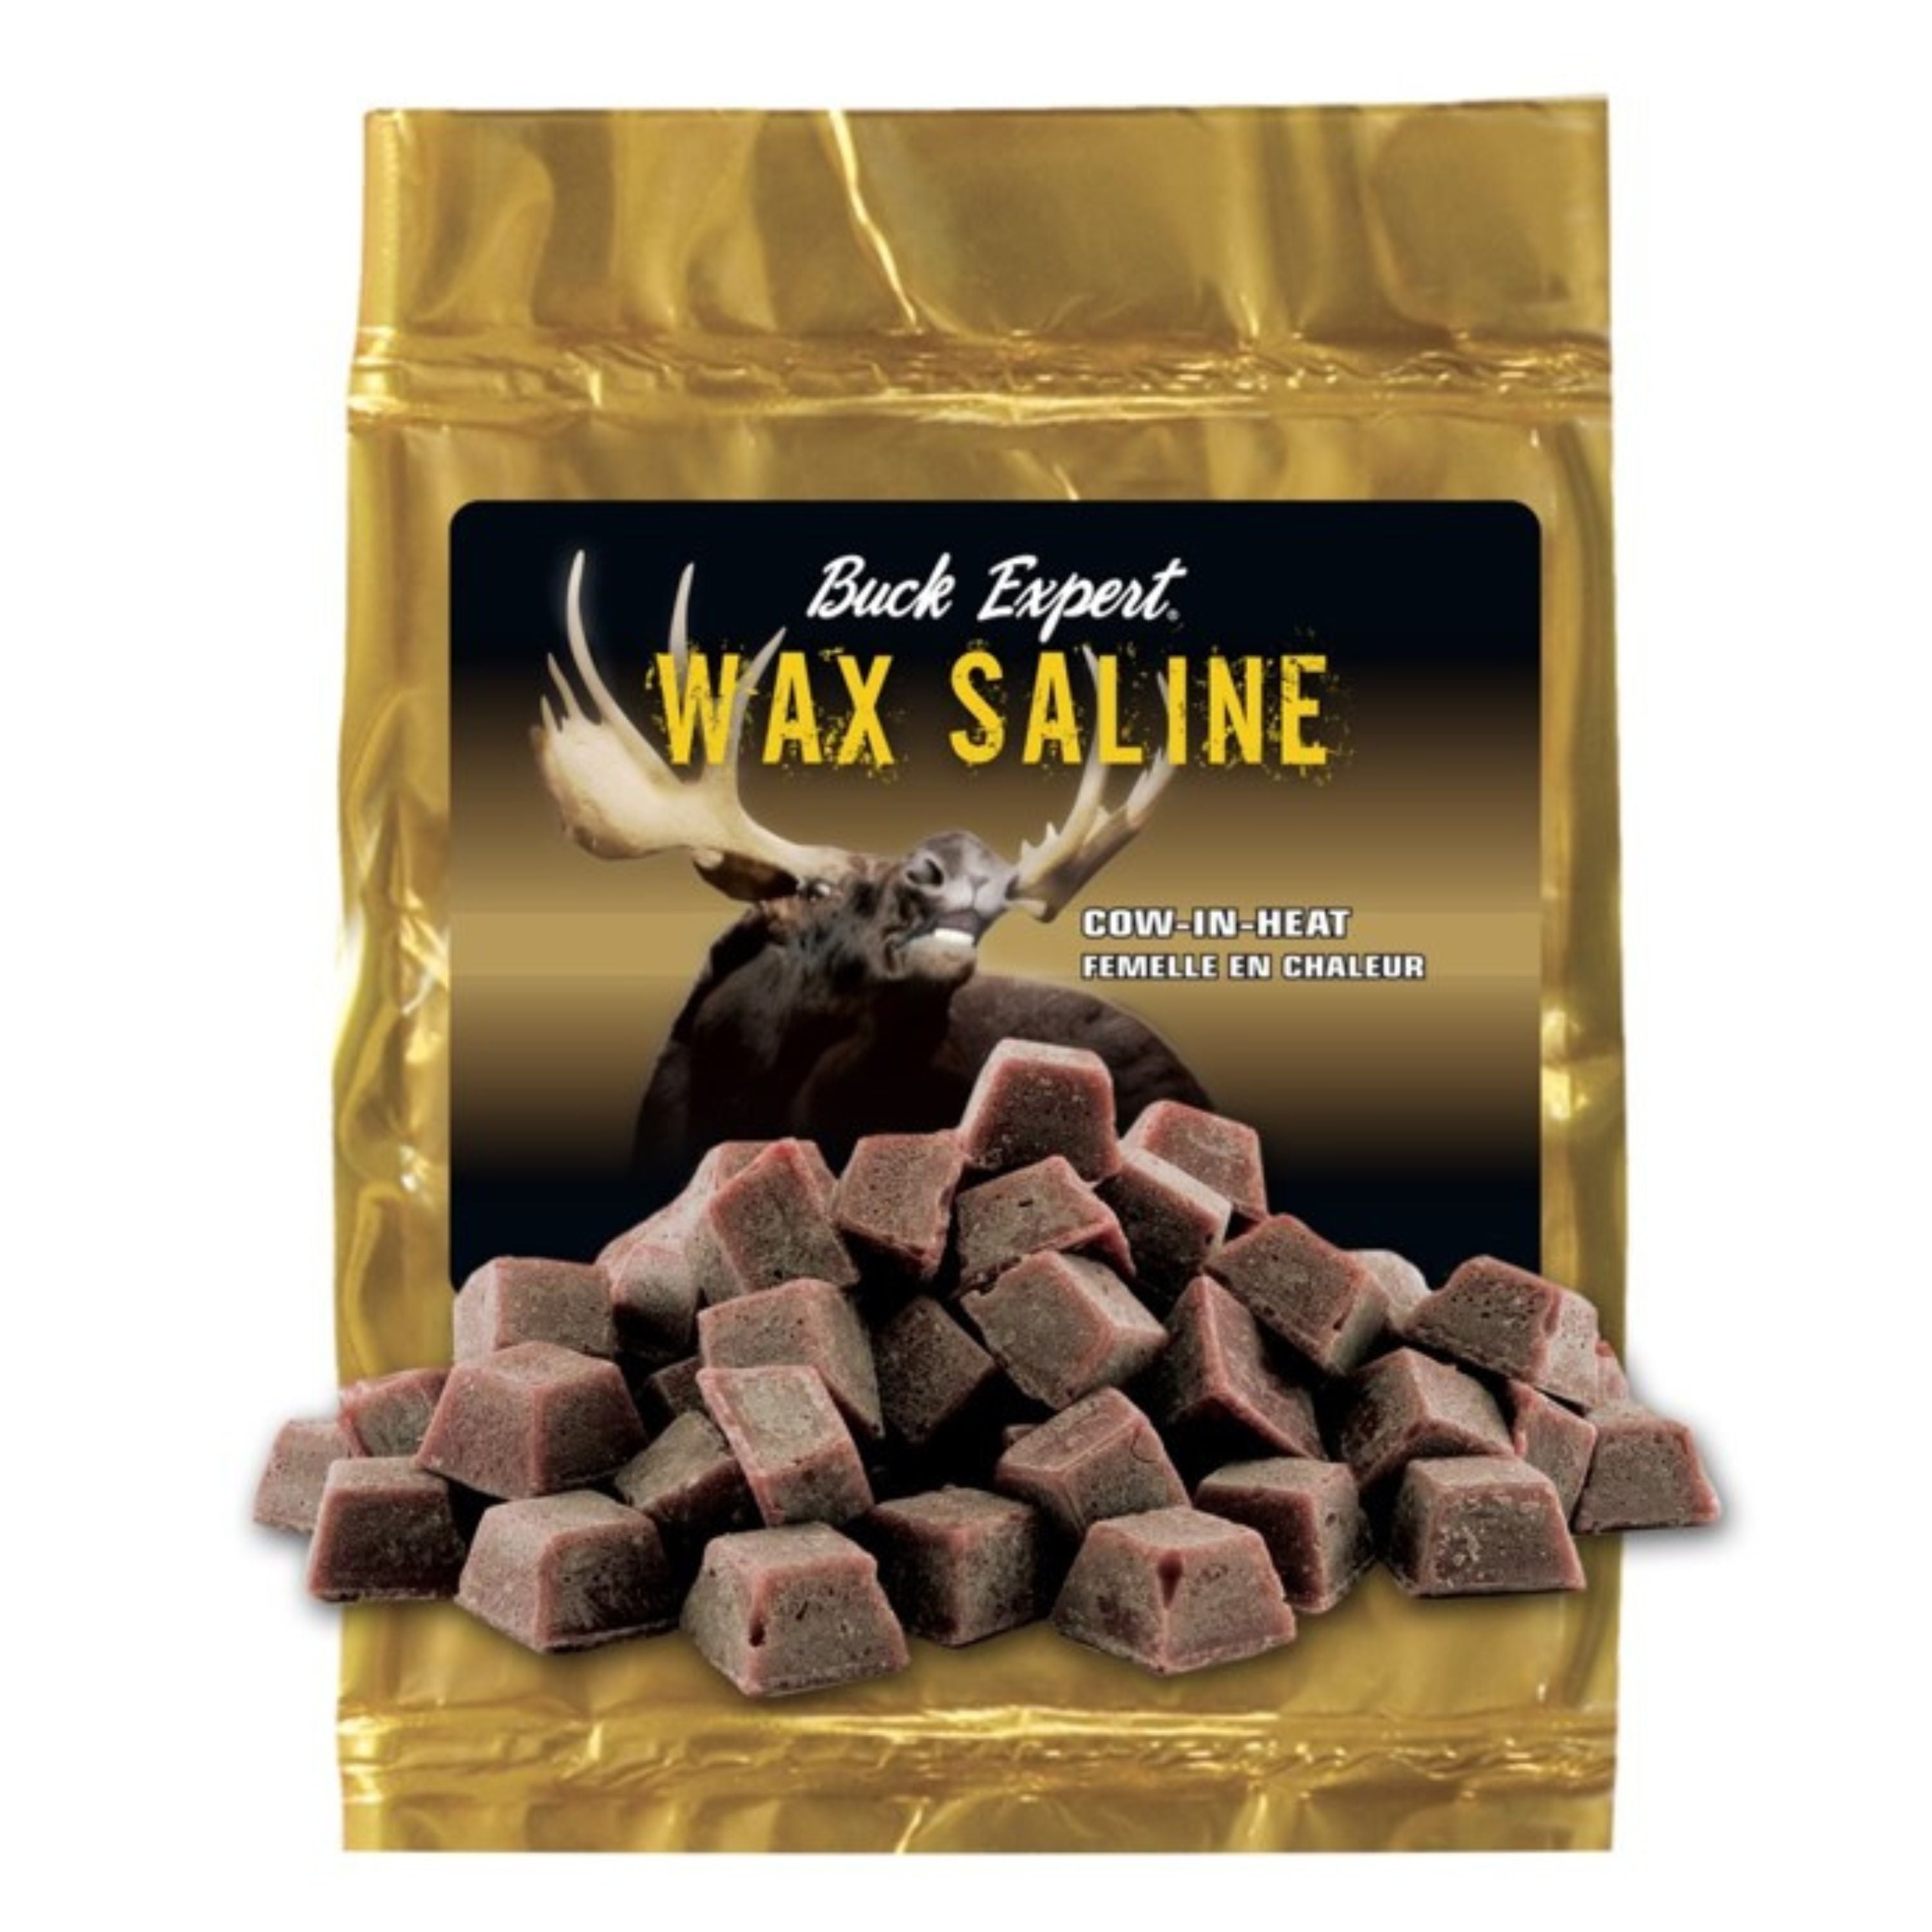 "Wax Saline"  - Cow in heat